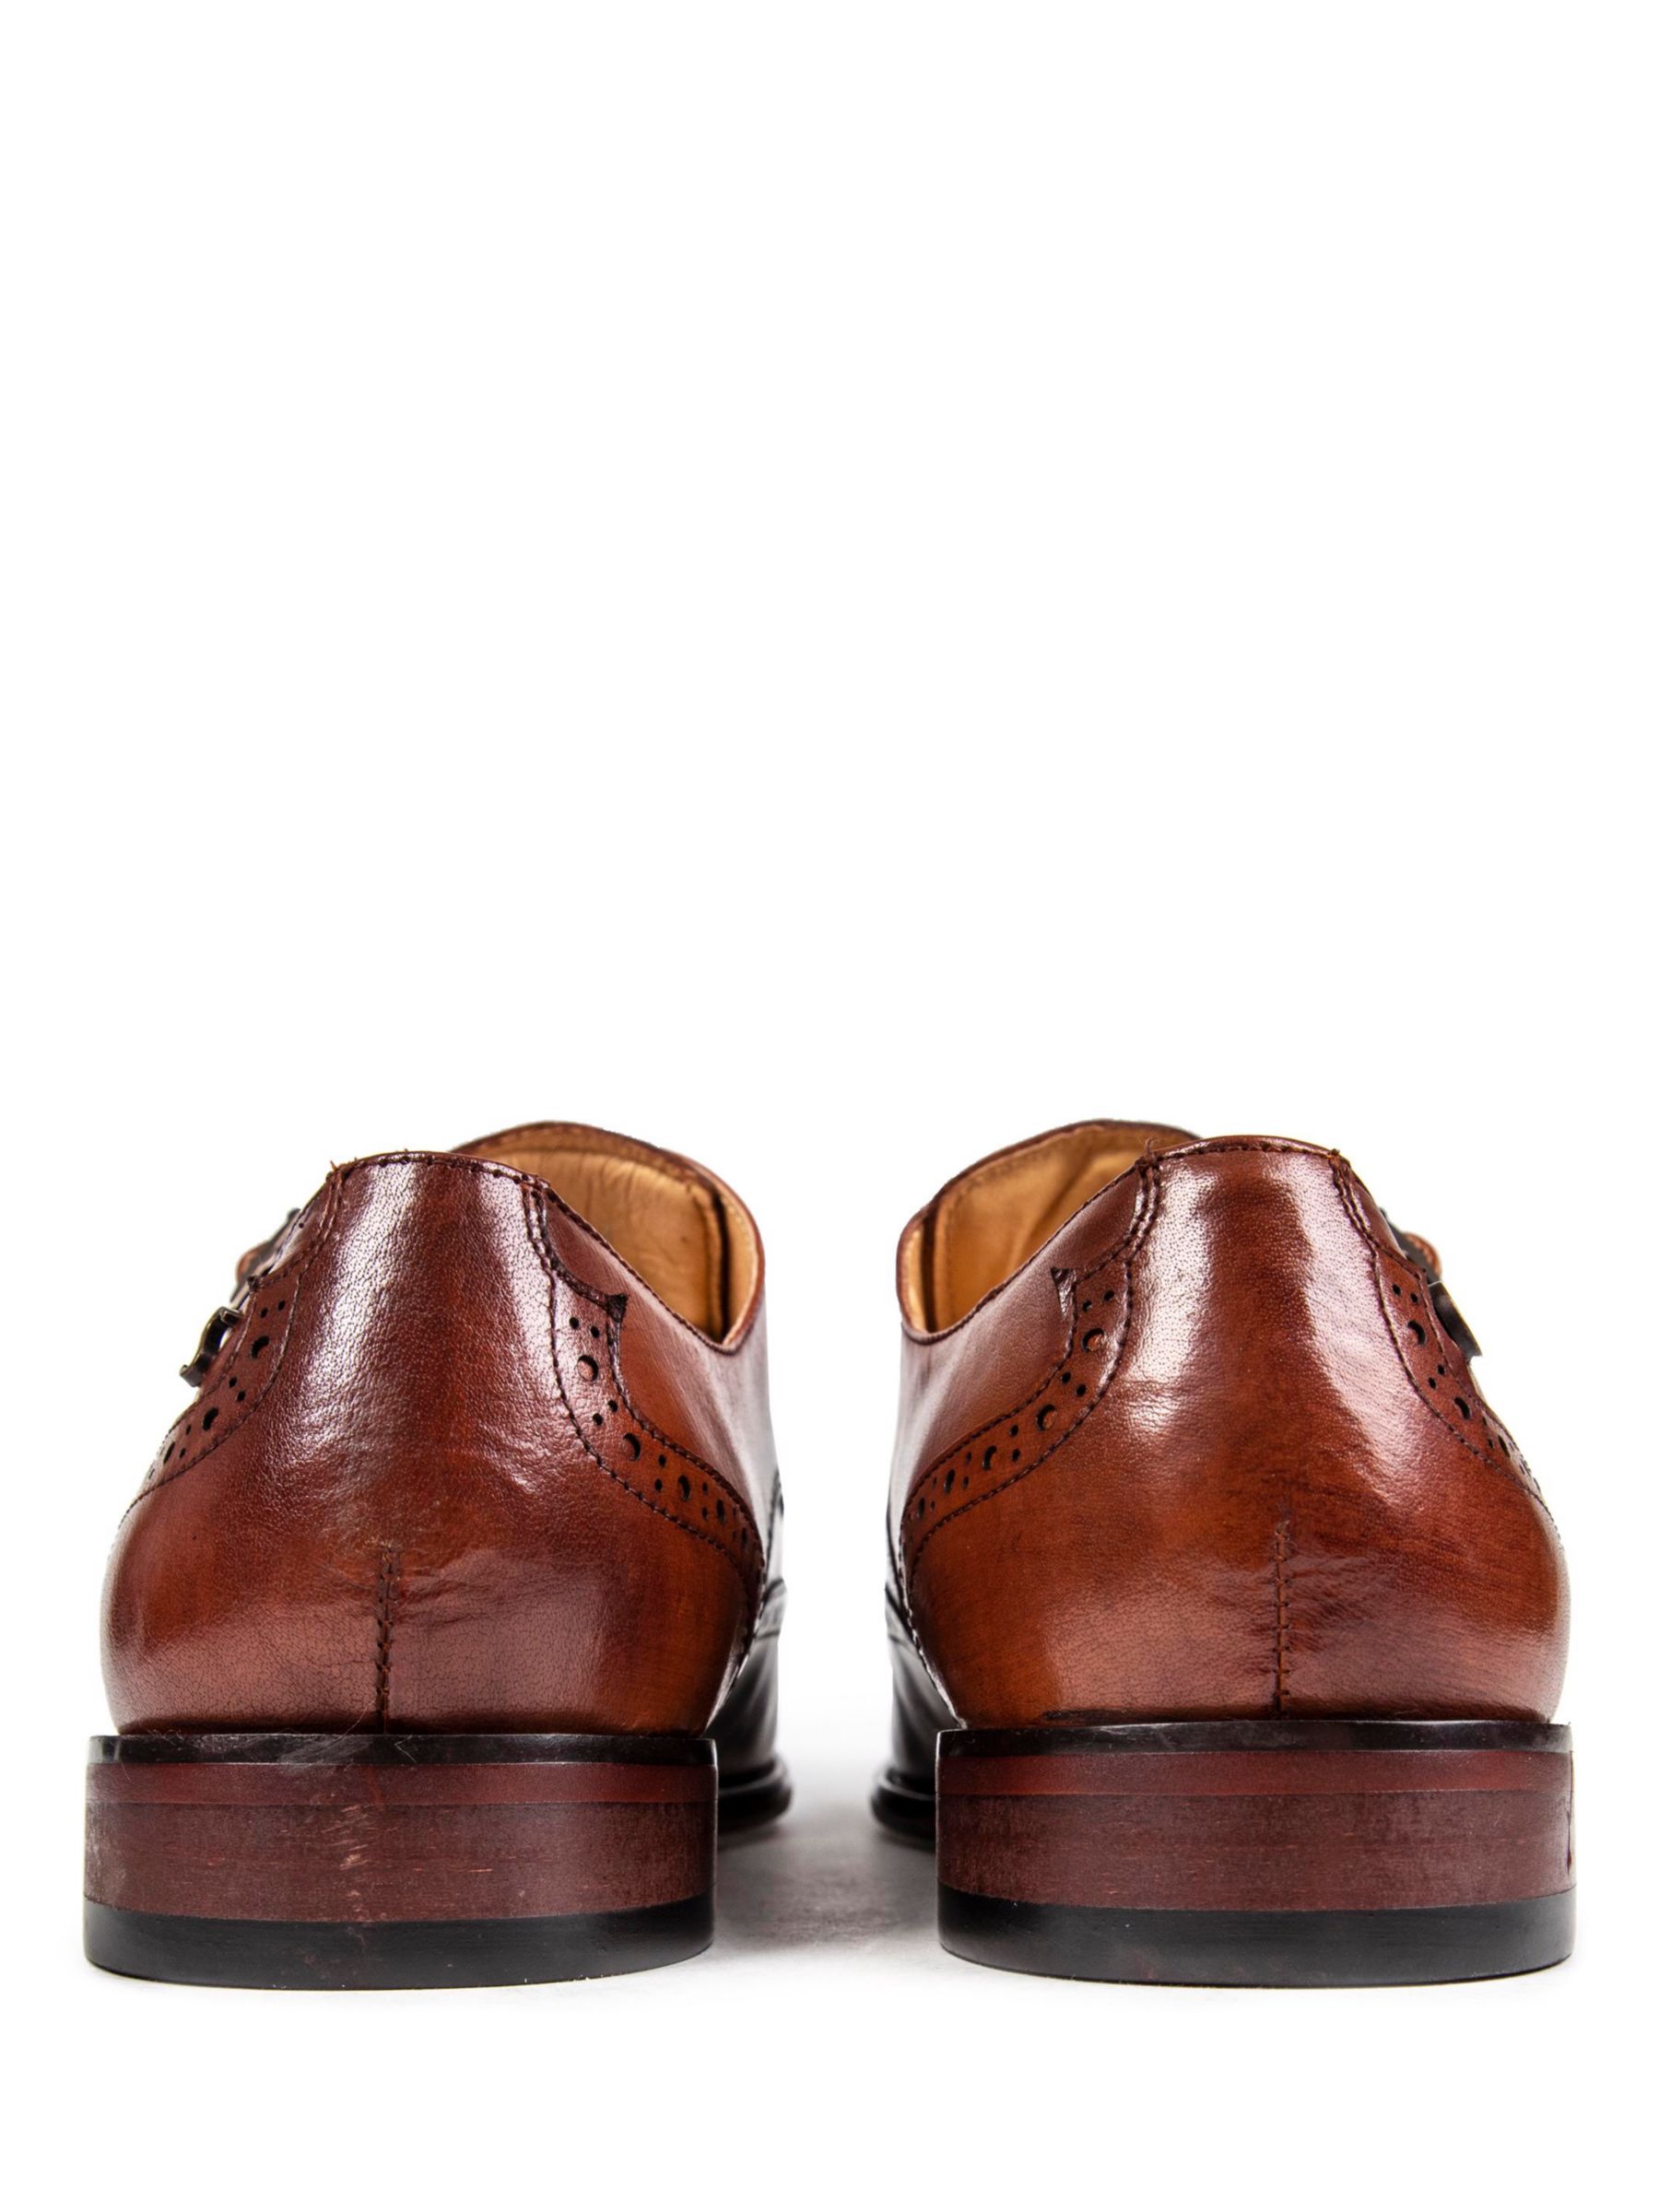 Simon Carter Spaniel Leather Monk Shoes, Tan at John Lewis & Partners